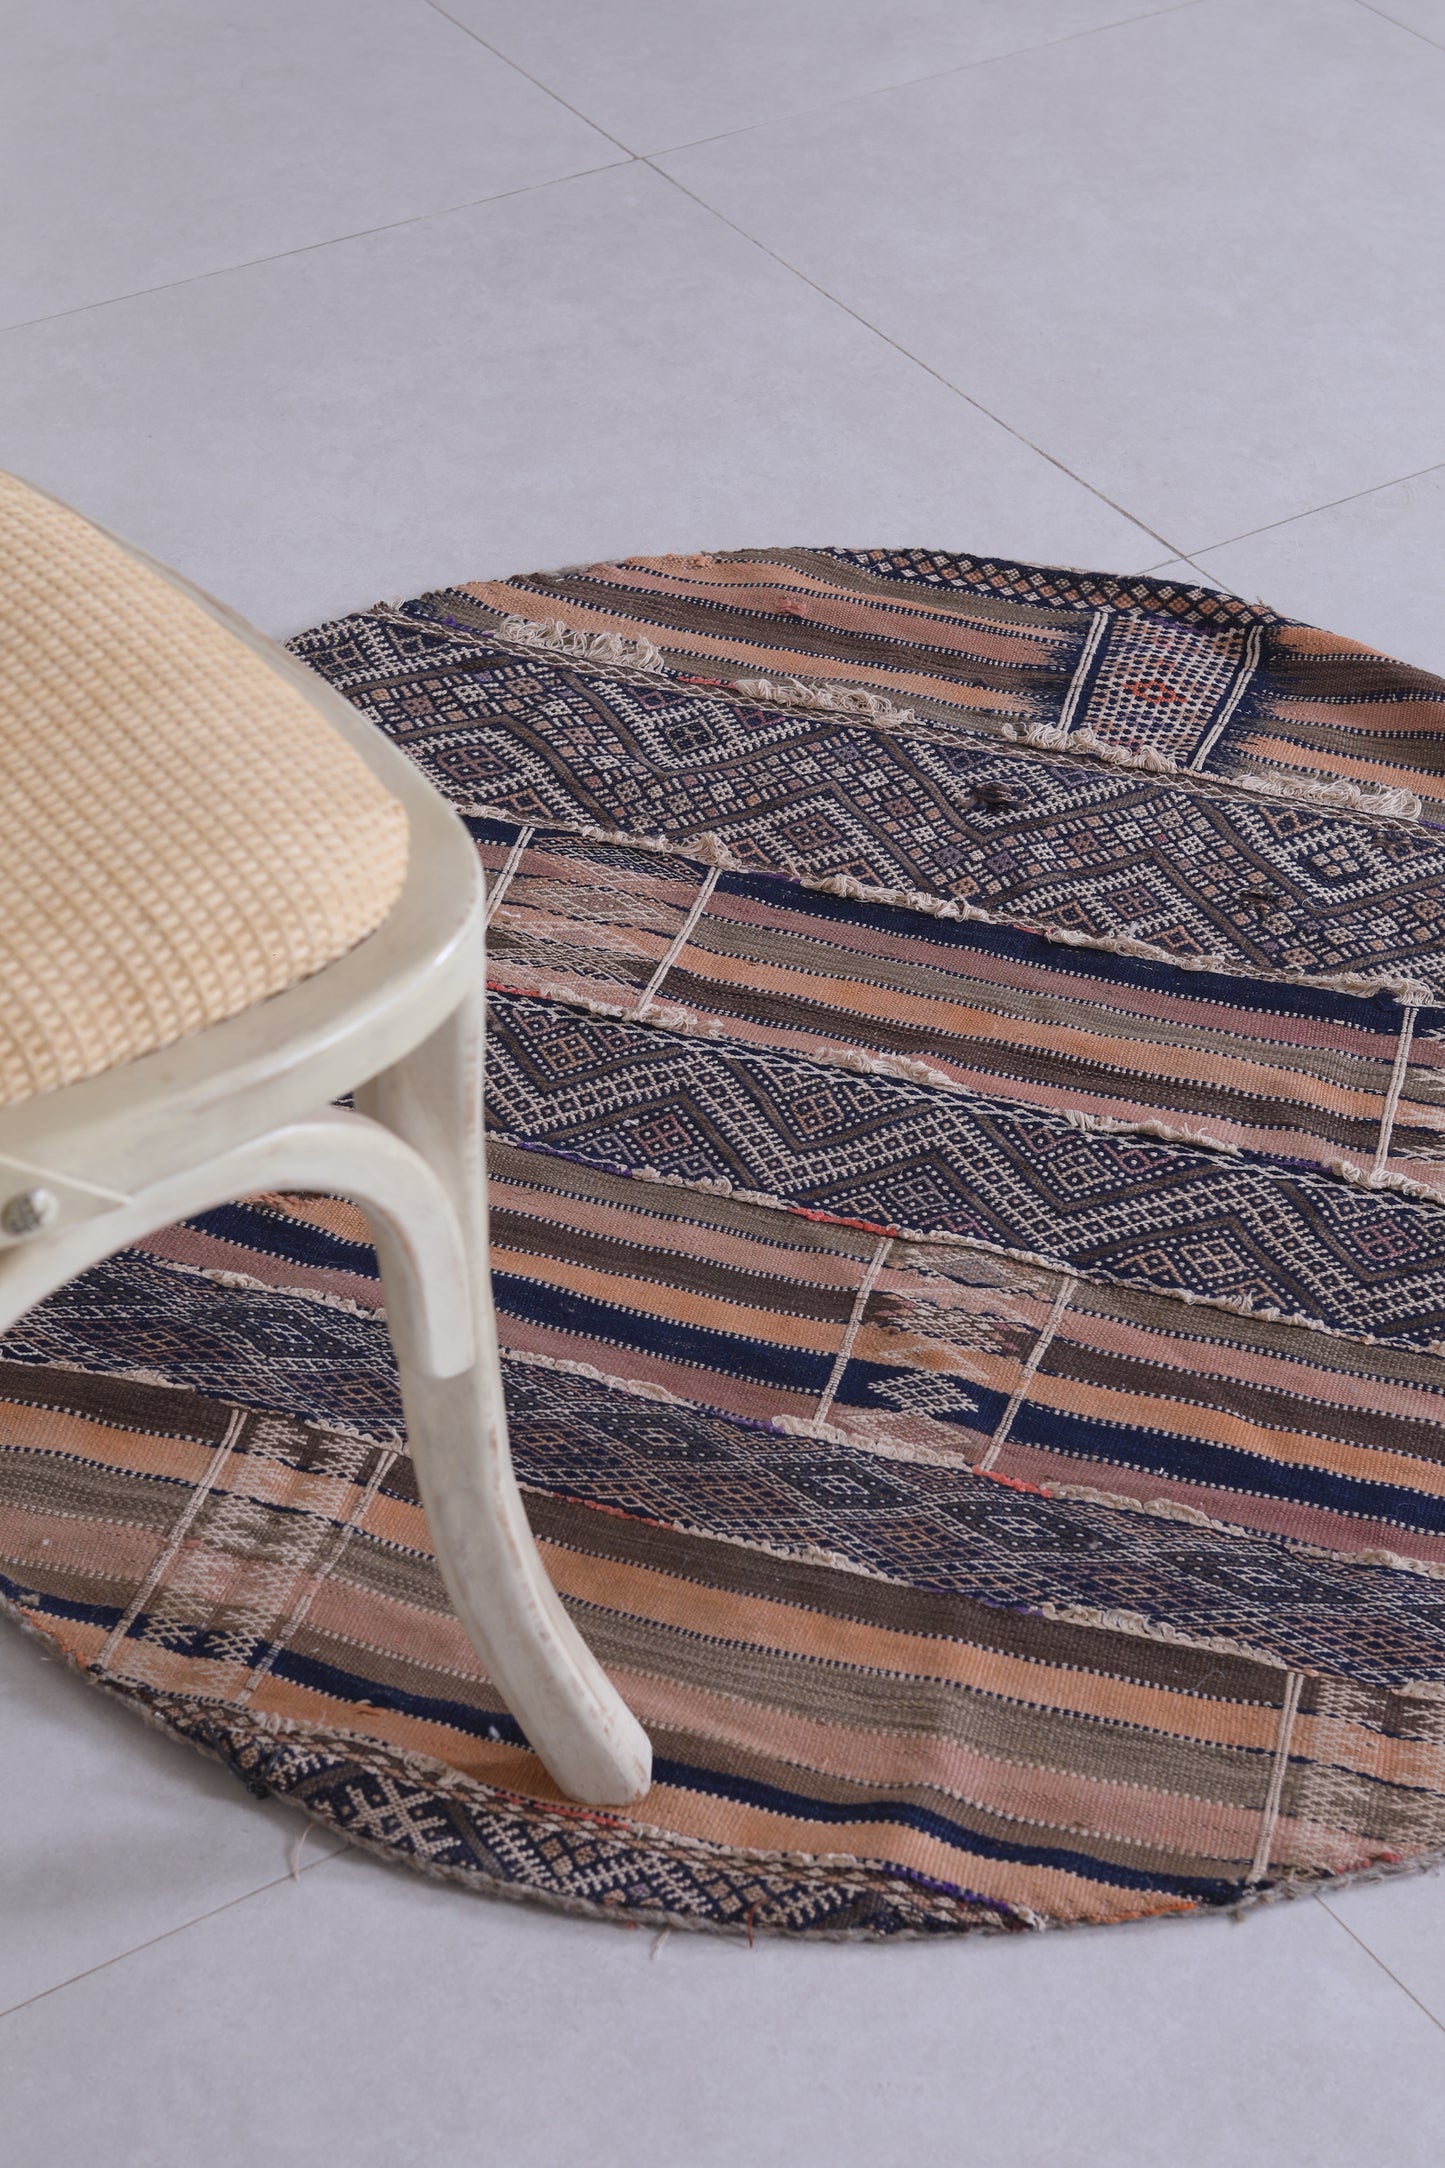 Moroccan round rug 3.4 FT - circle rug